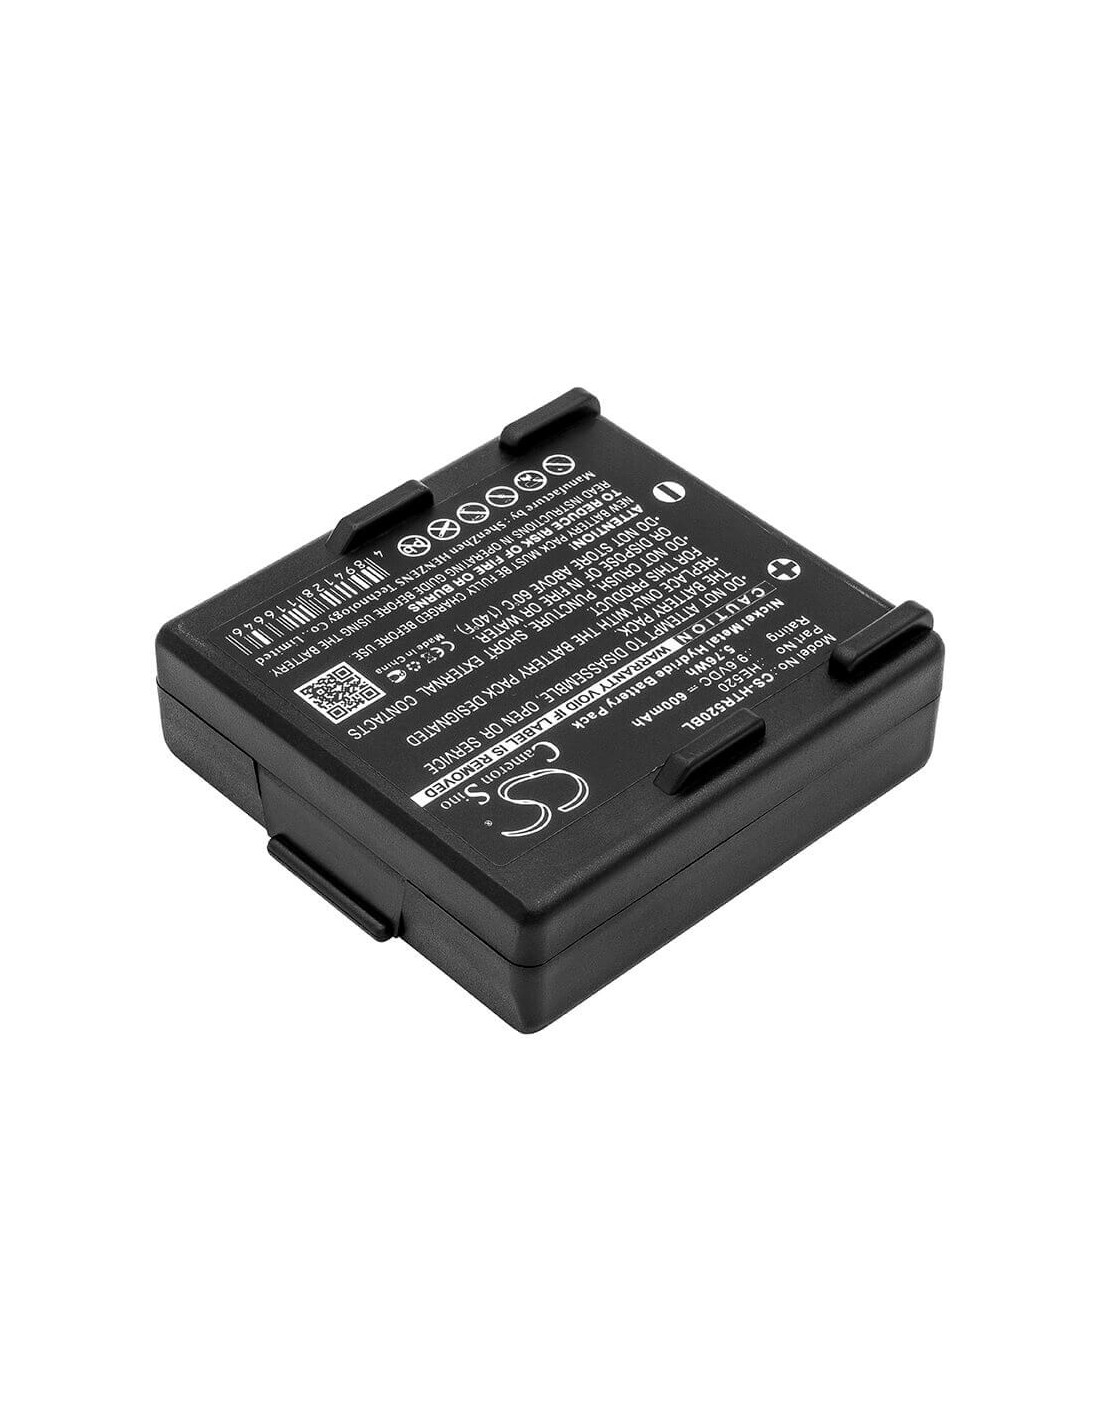 Battery for Abitron Kh68300520.a 9.6V, 600mAh - 5.76Wh